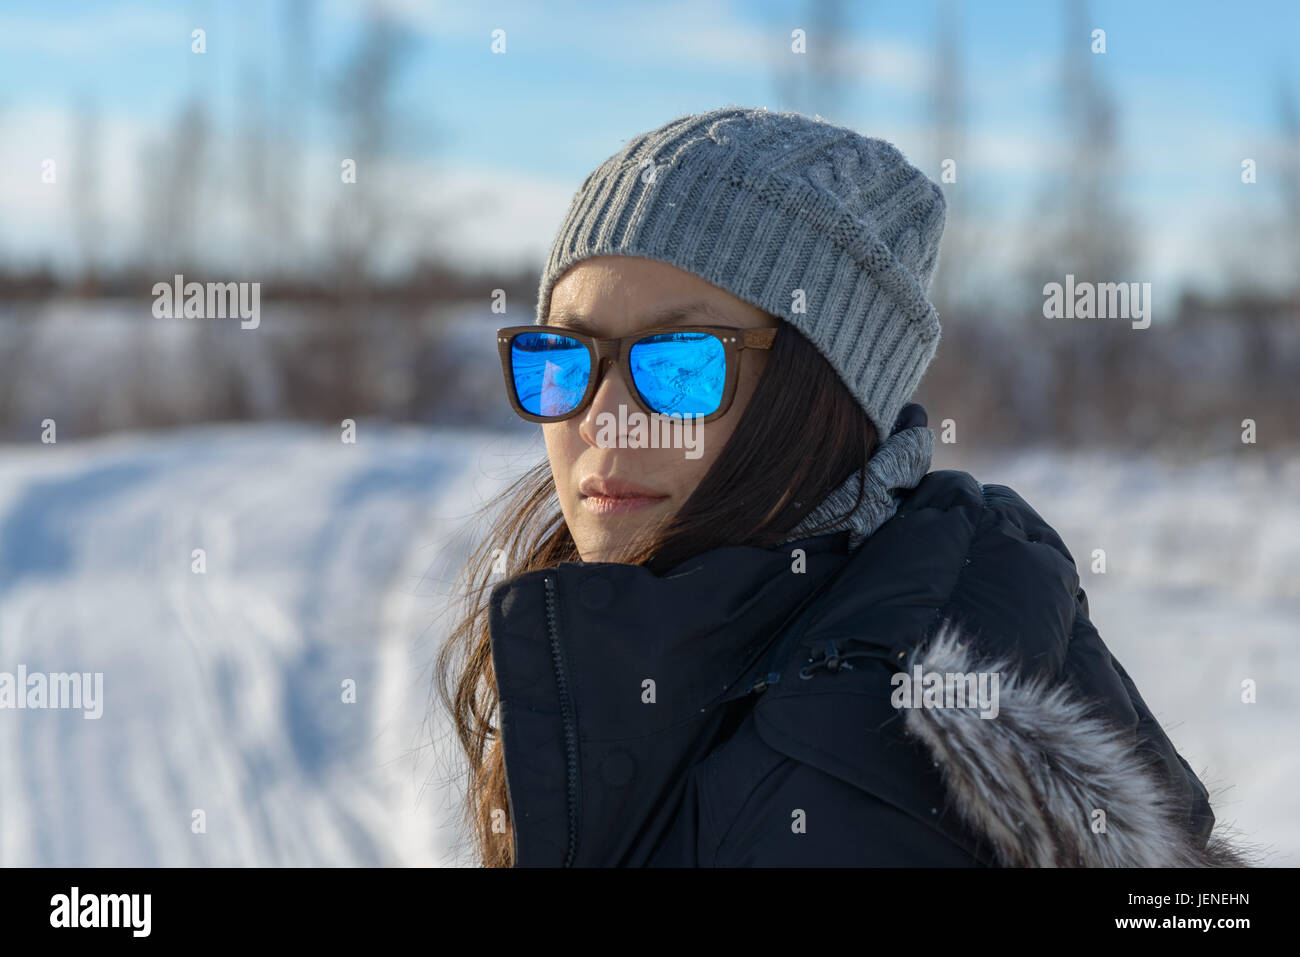 https://c8.alamy.com/comp/JENEHN/portrait-of-a-woman-in-the-snow-wearing-sunglasses-JENEHN.jpg